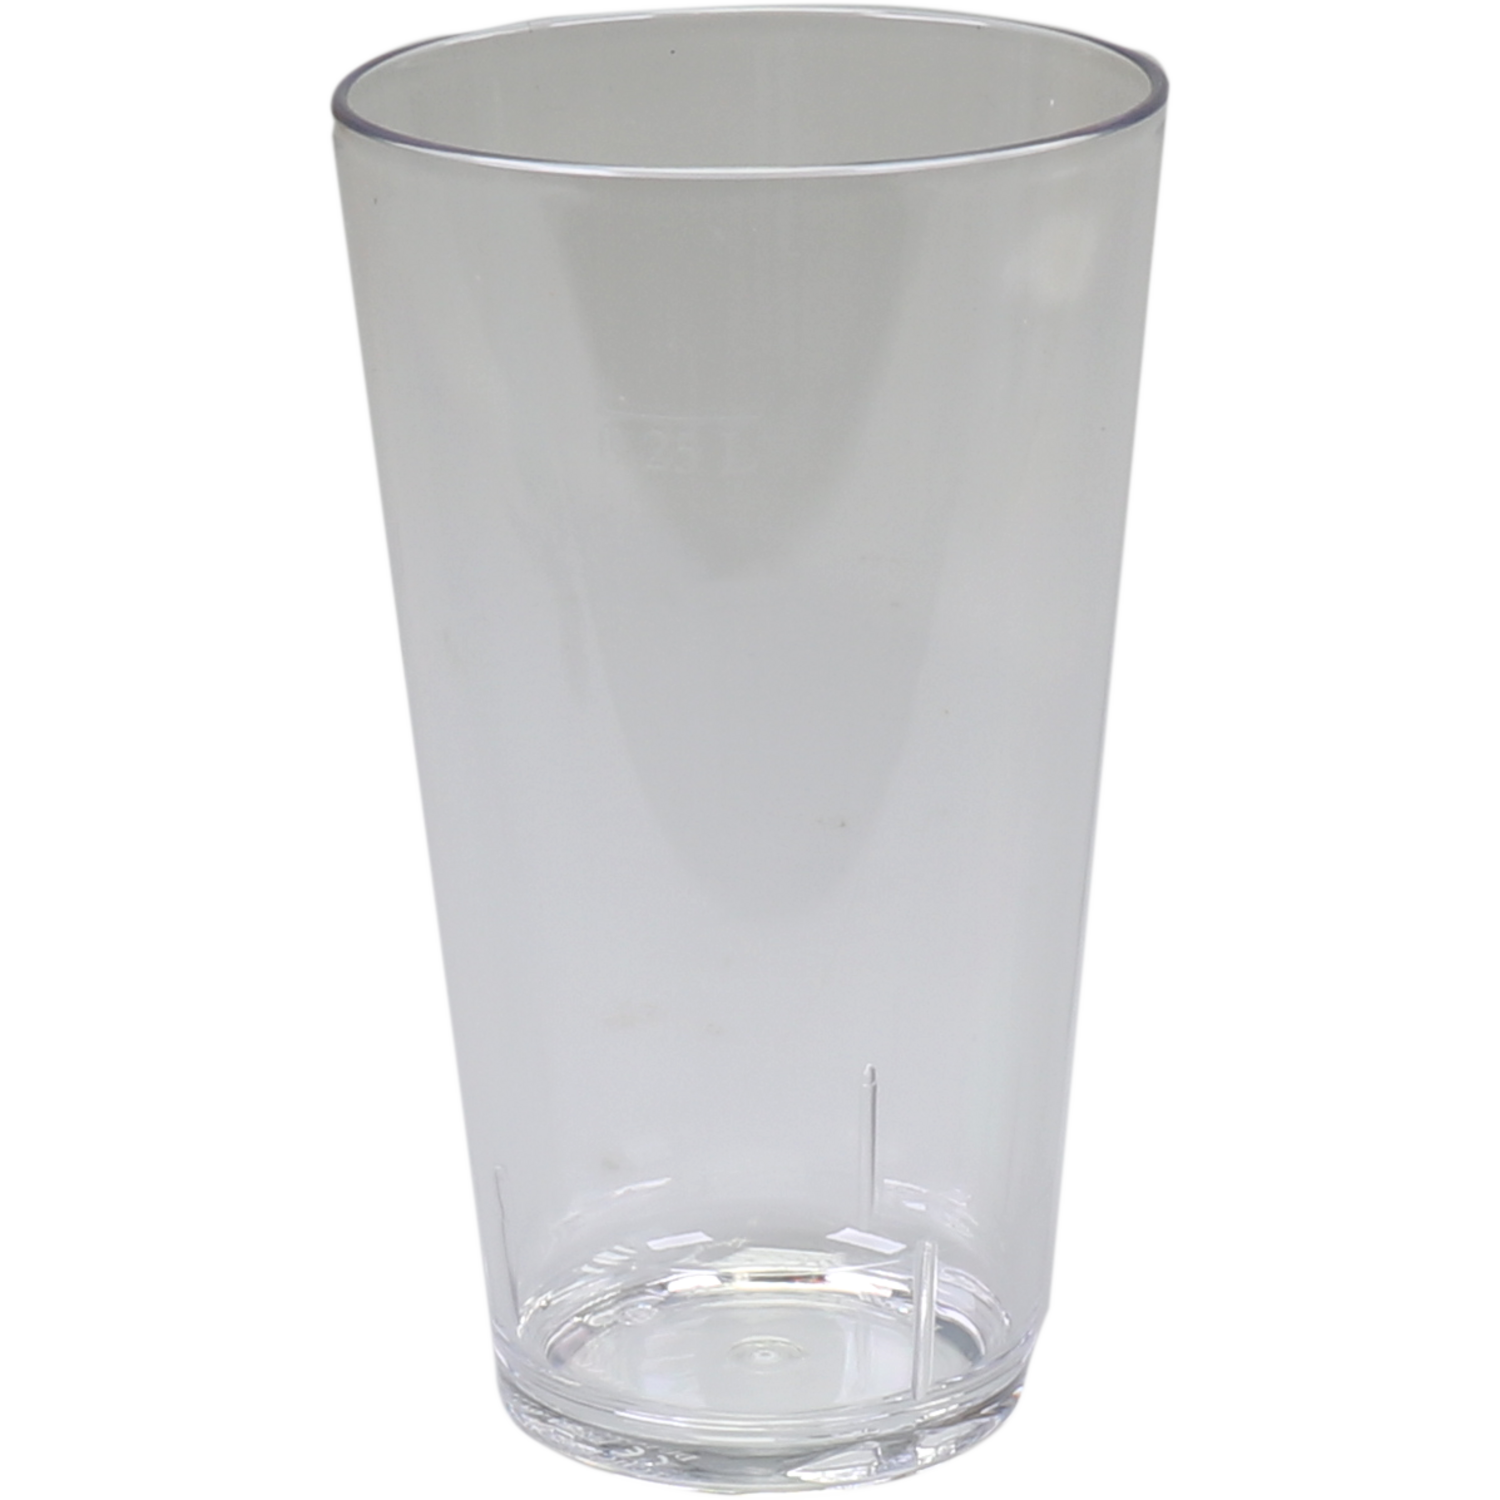 Depa® Glass, amsterdammertje, reusable, unbreakable, pETG, 330ml, transparent 1